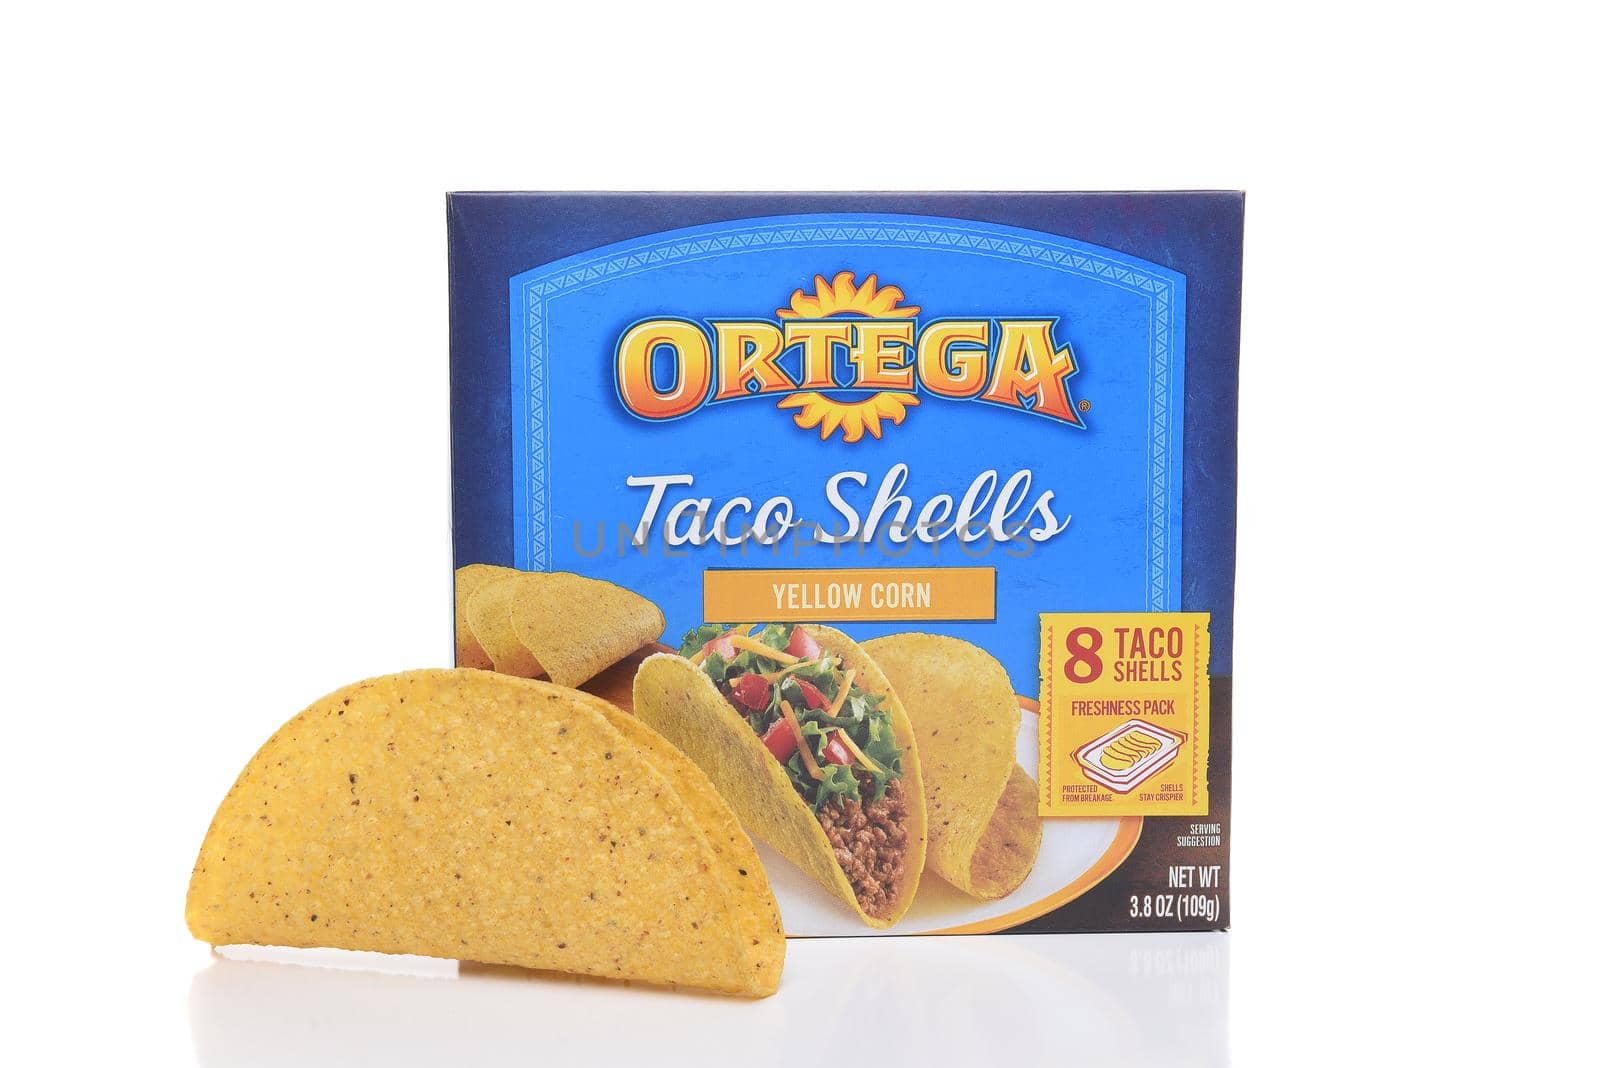 Ortega Taco Shells by sCukrov